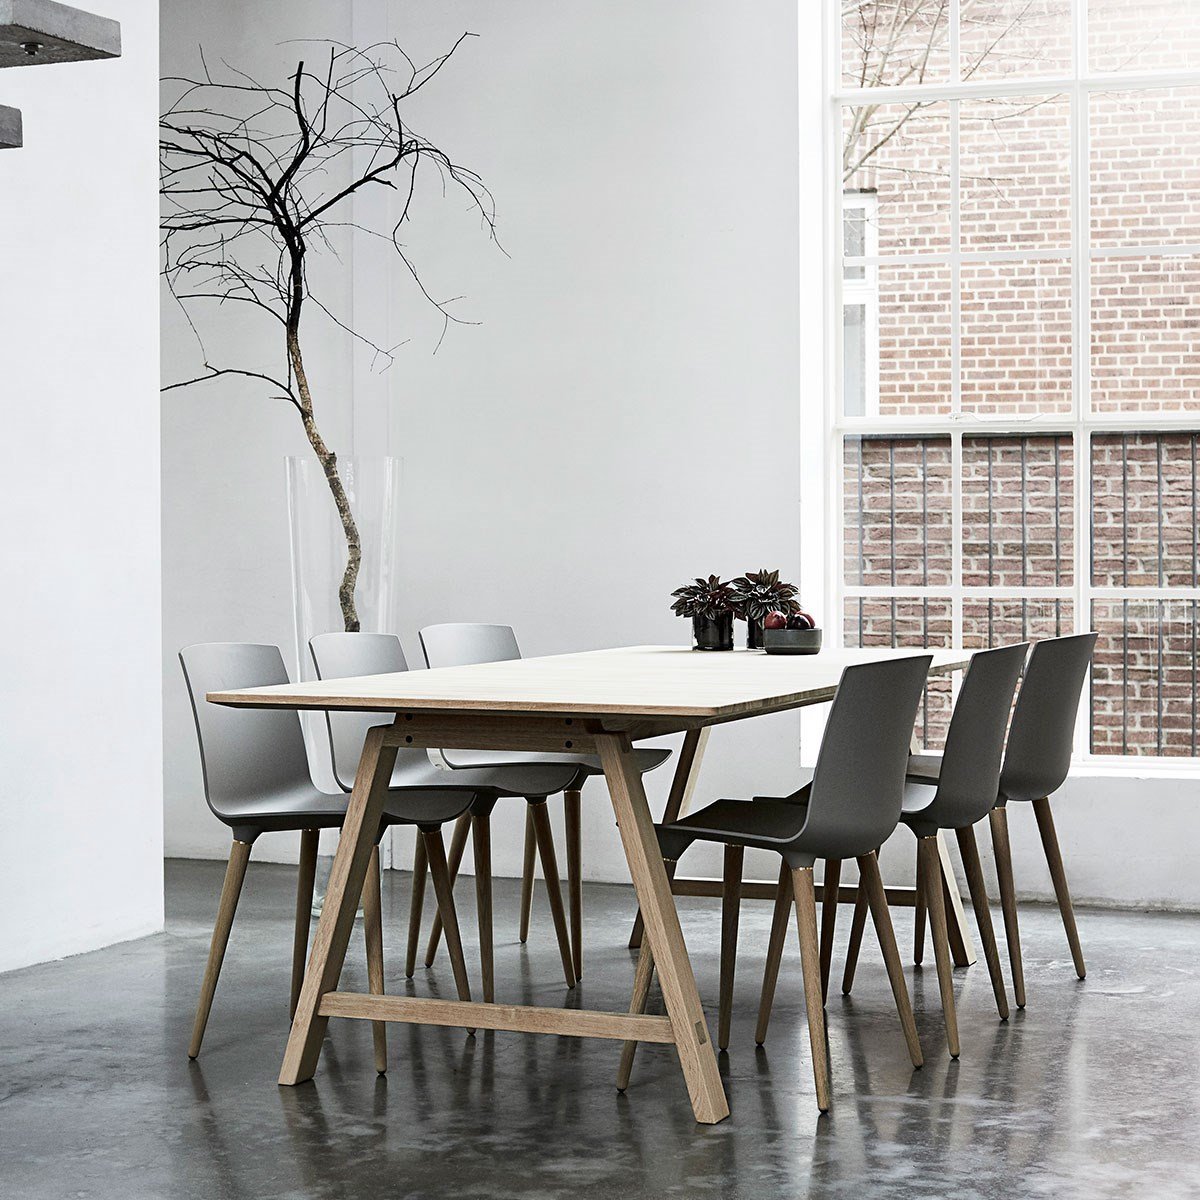 Andersen Furniture T1 utdragbart bord, vitt laminat, tvålad ek, 160 cm